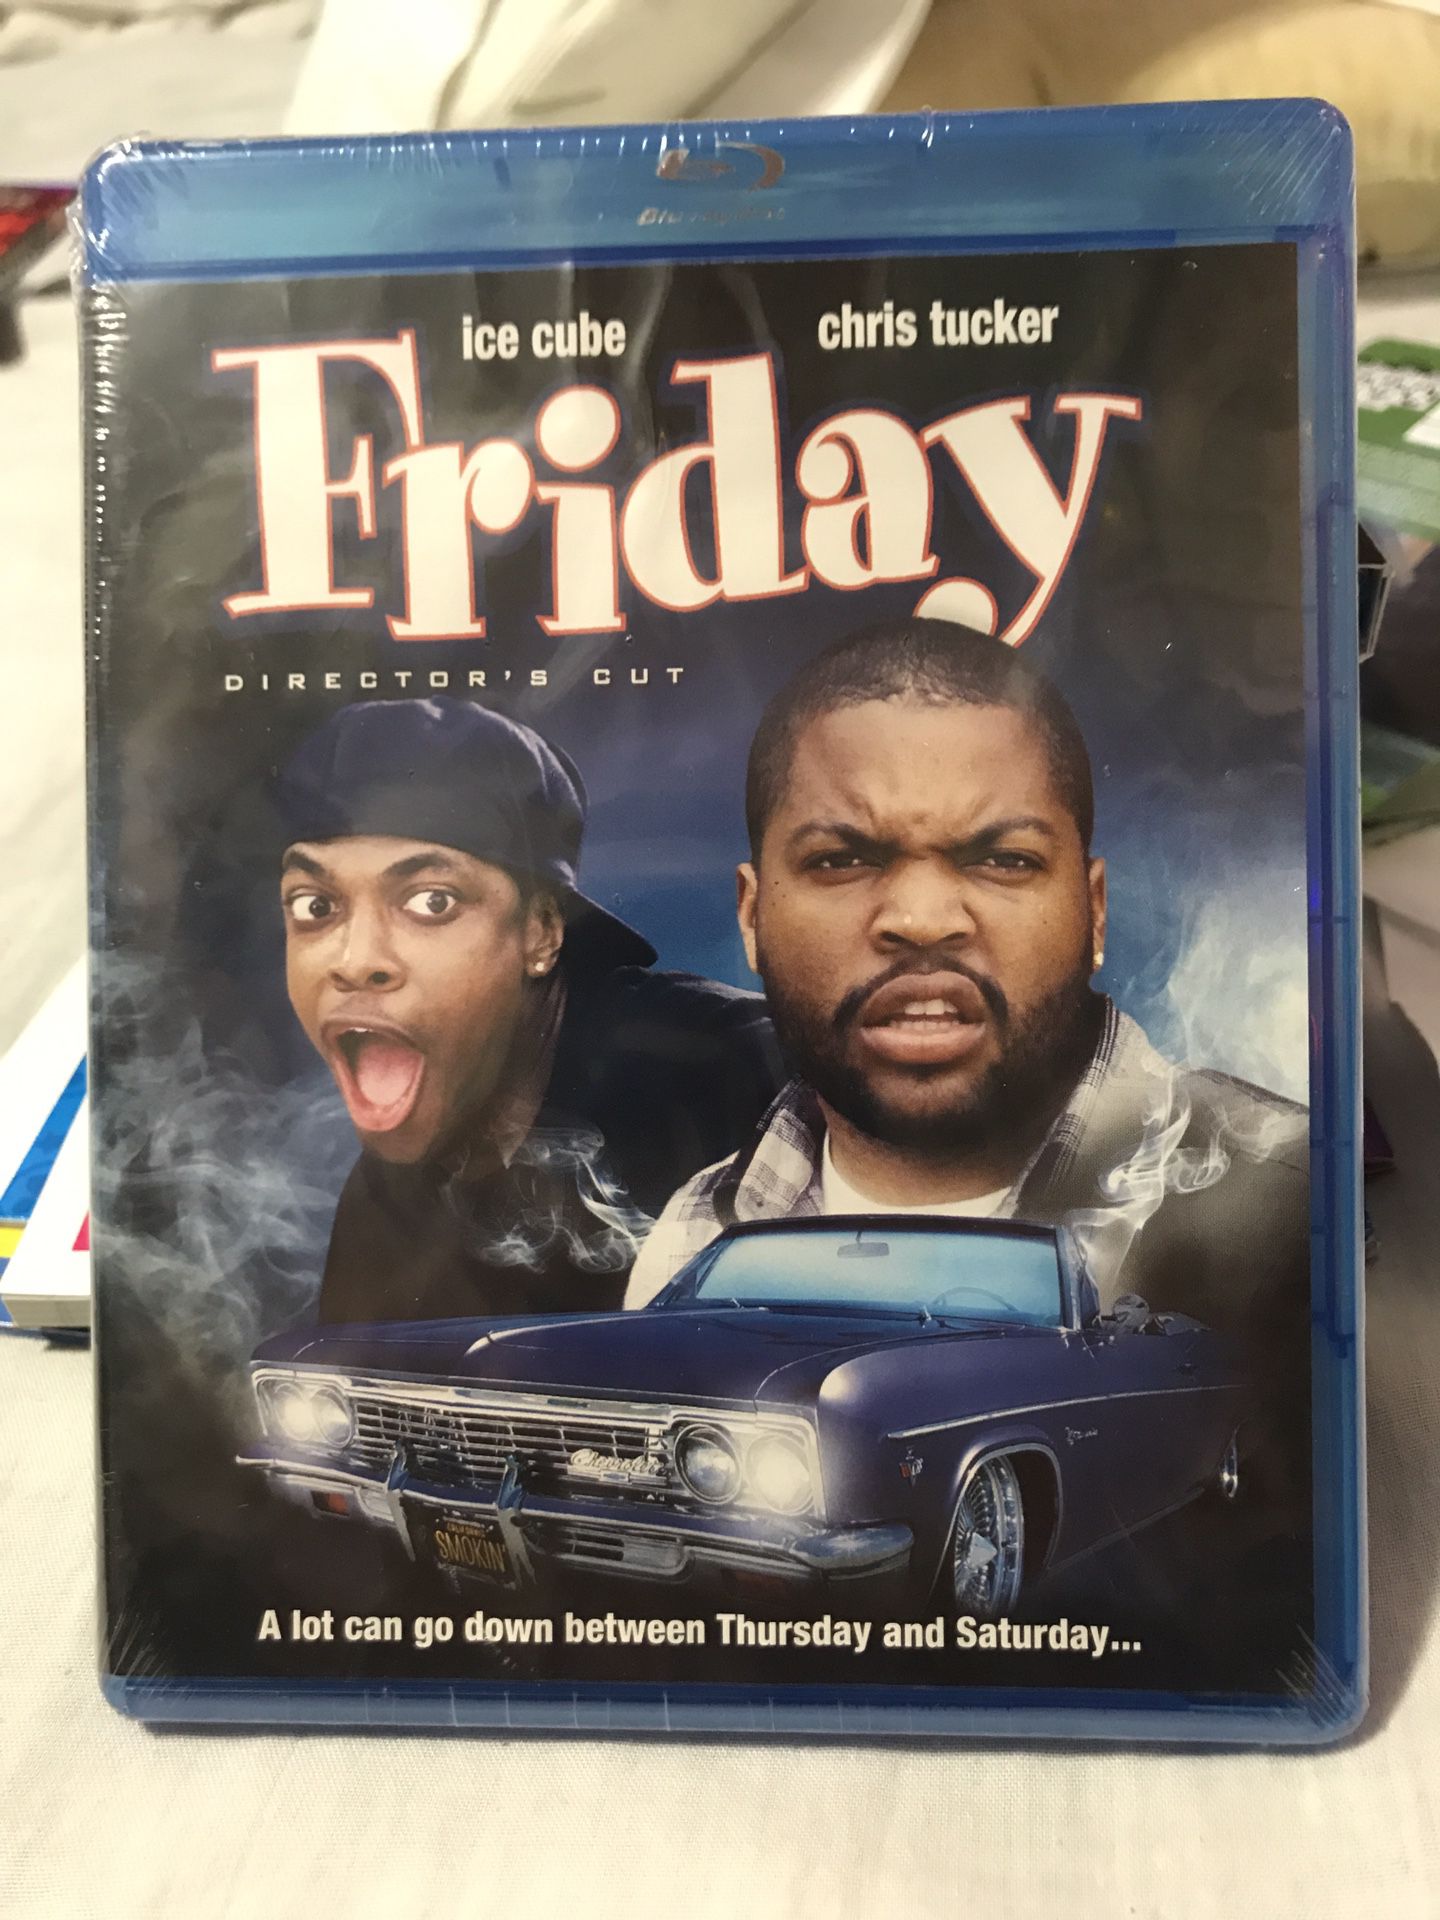 Friday (Director’s Cut) BluRay DVD